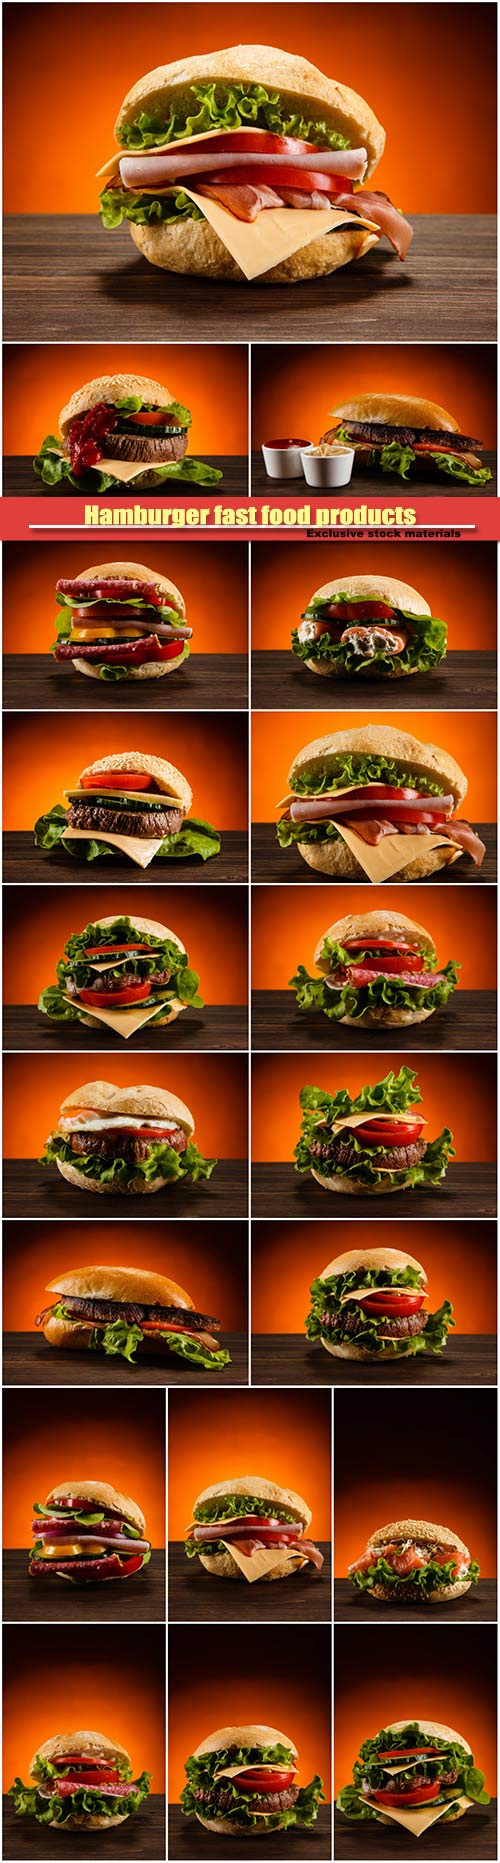 Hamburger fast food products